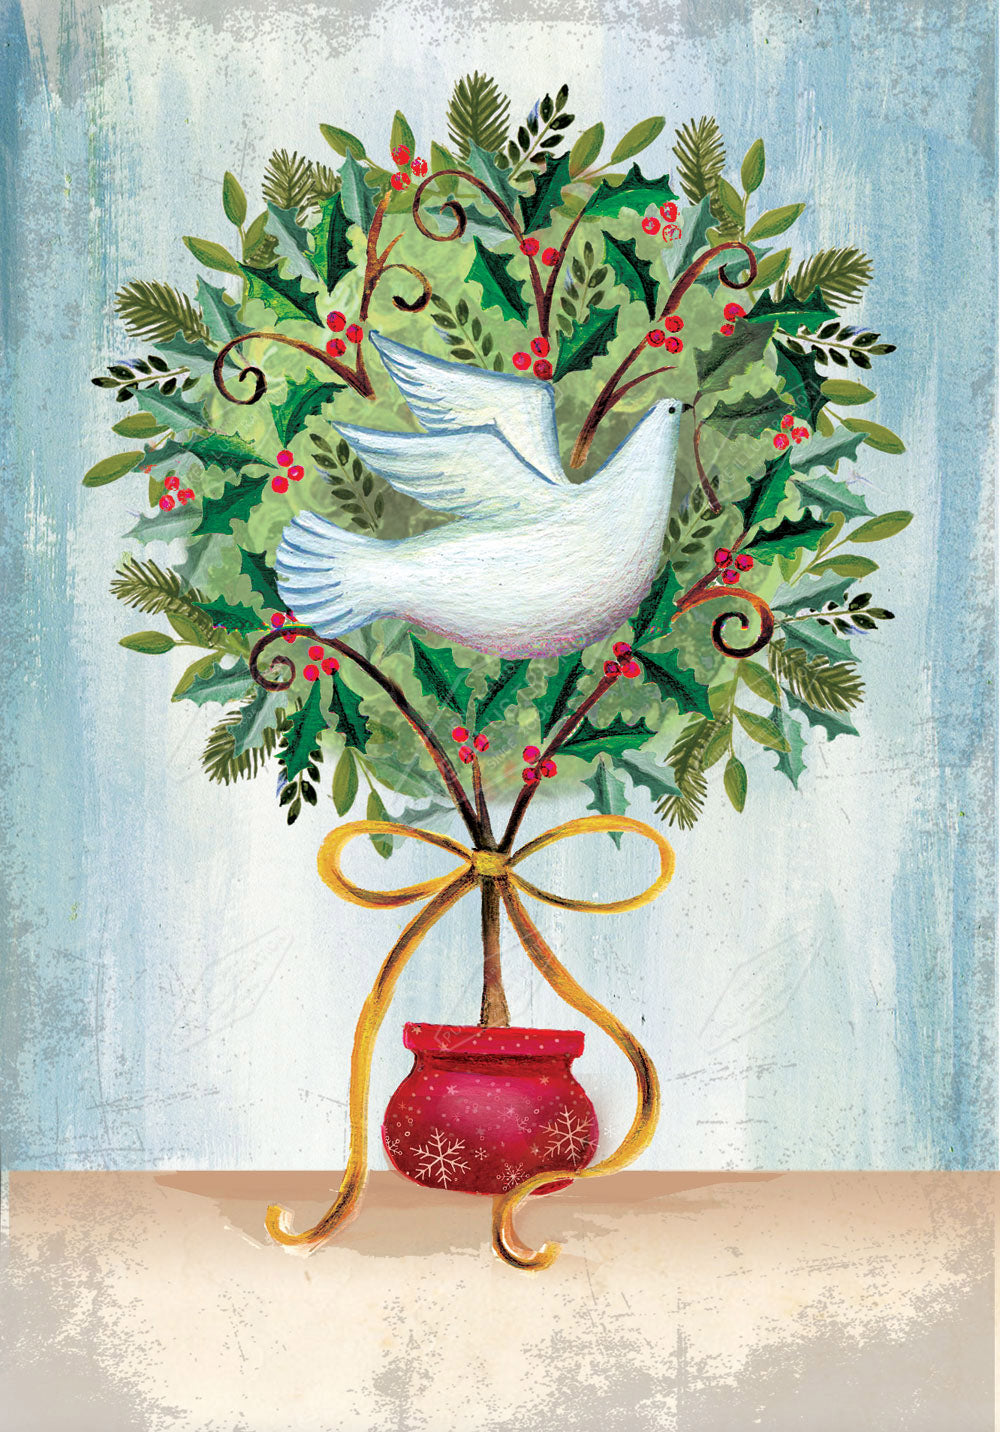 00022850DEV - Deva Evans is represented by Pure Art Licensing Agency - Christmas Greeting Card Design